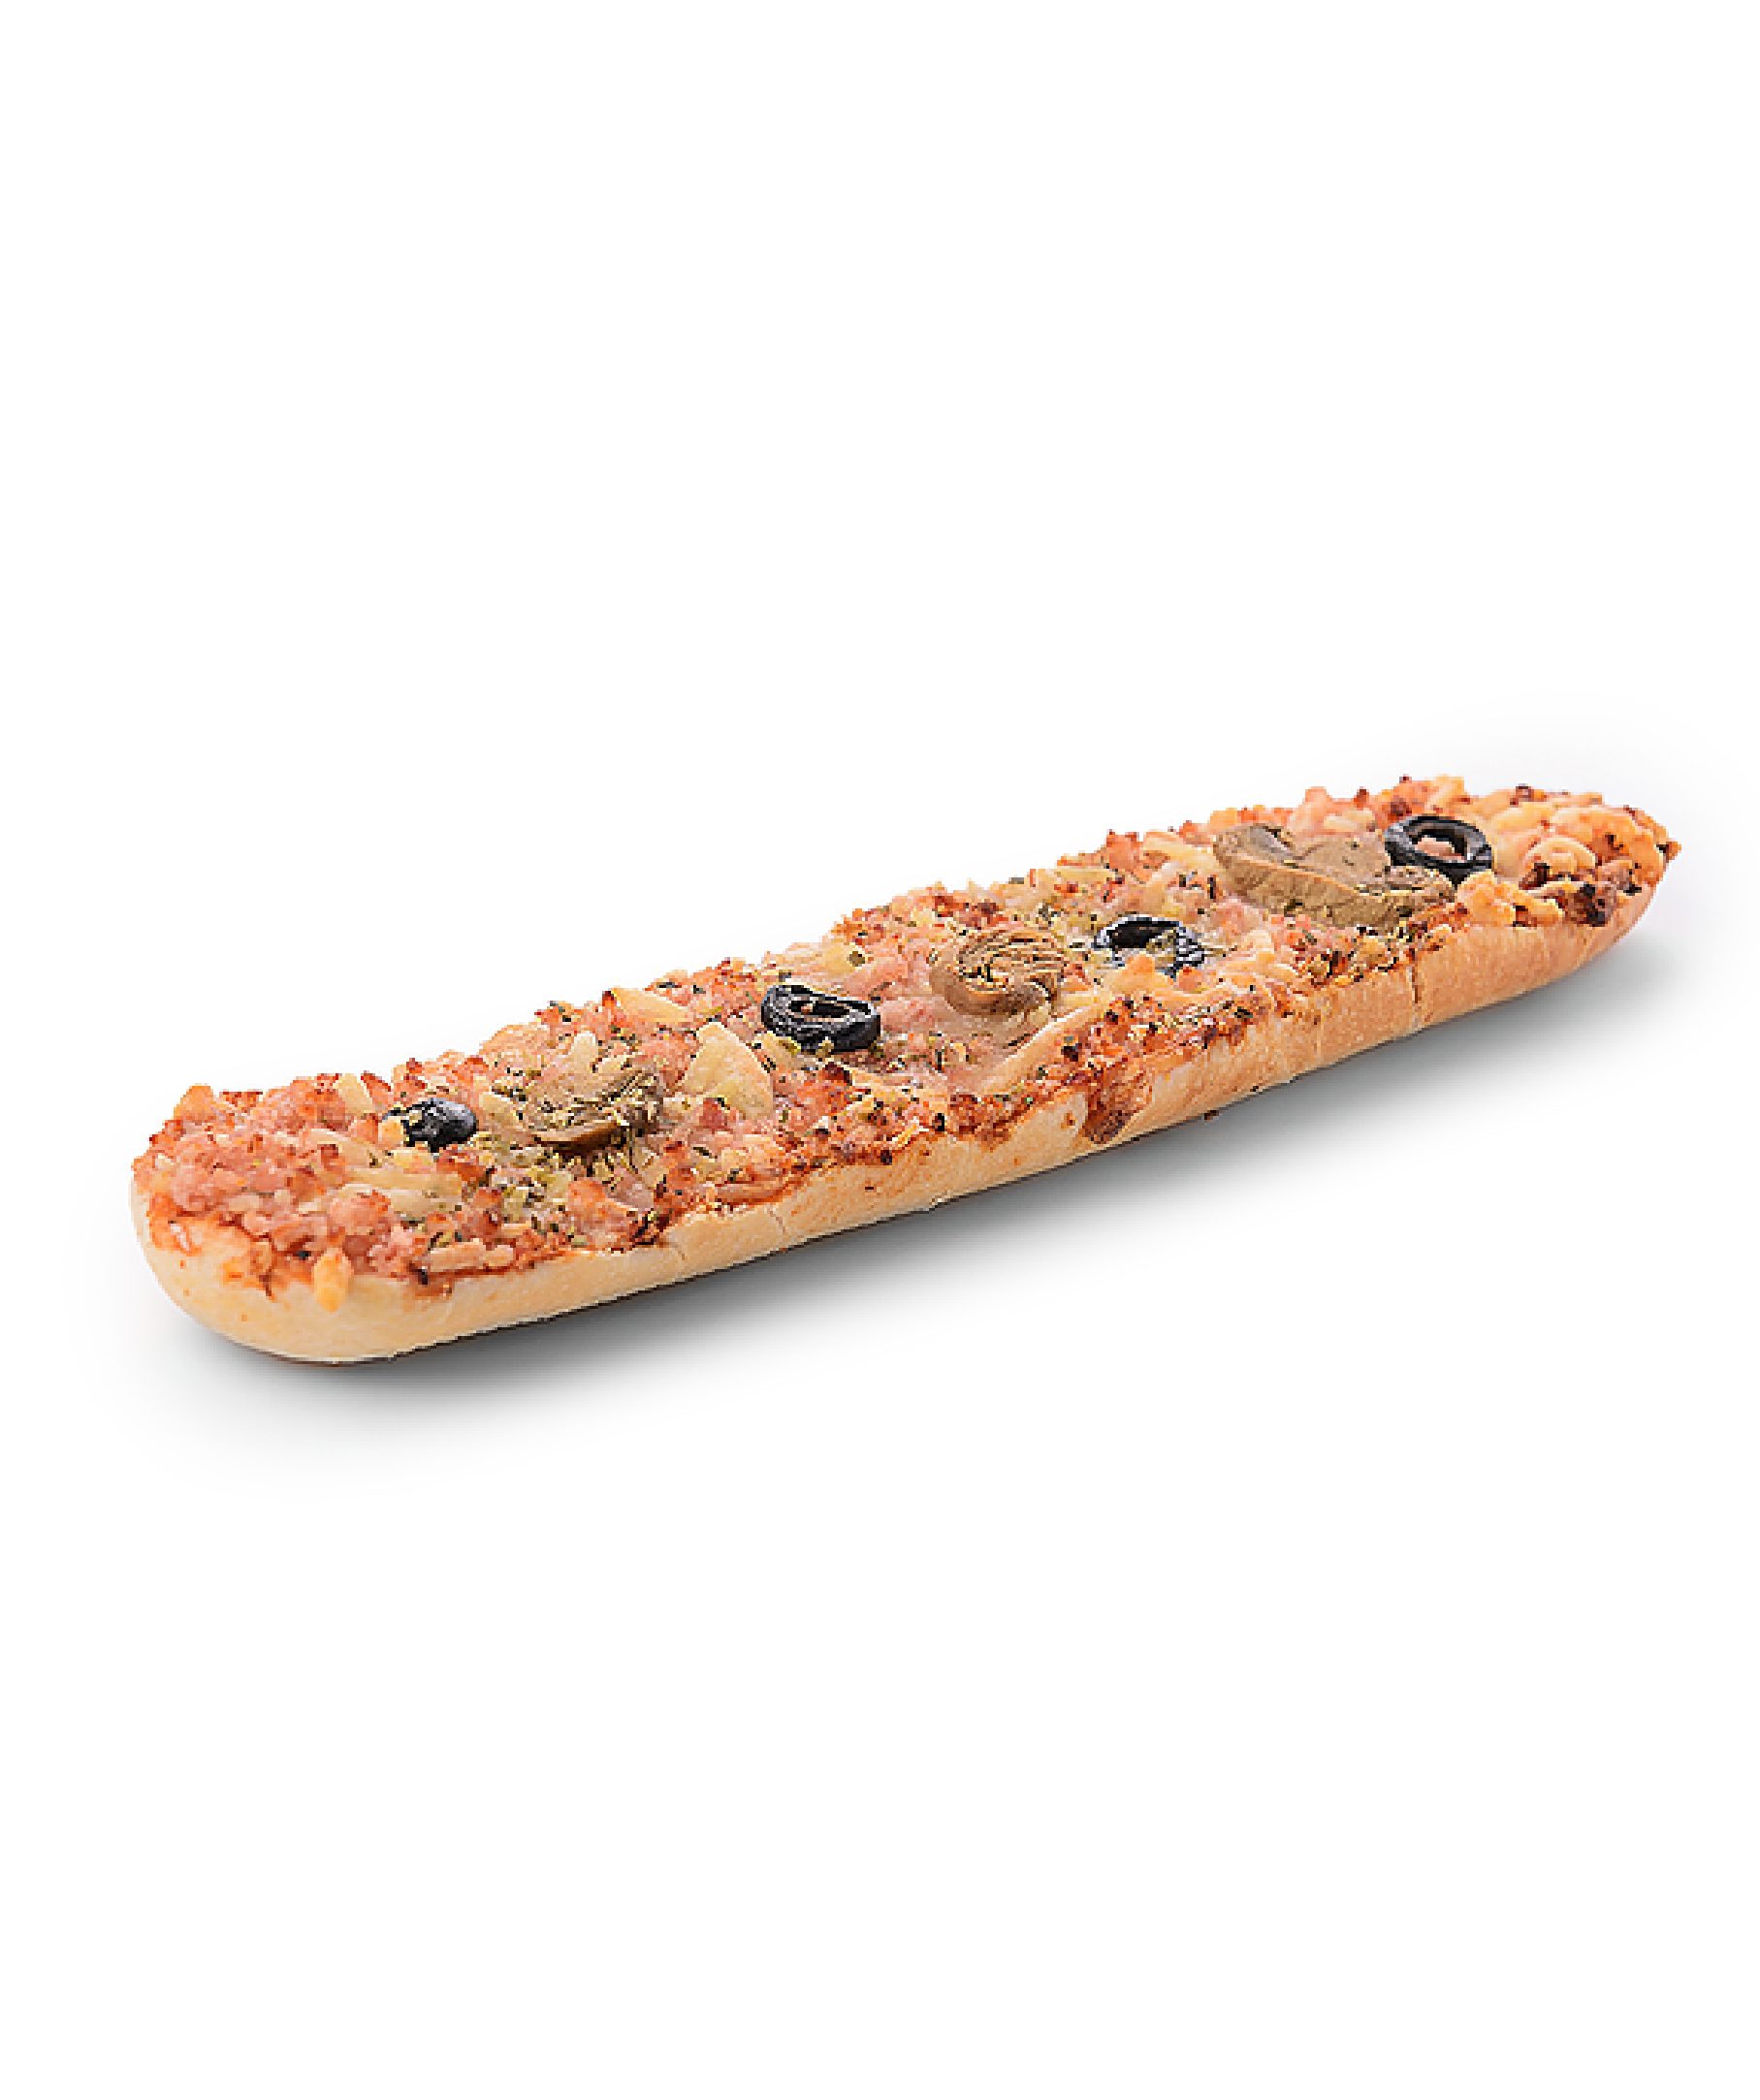 qsa-produto-salgados-merendas-Baguete-Pizza